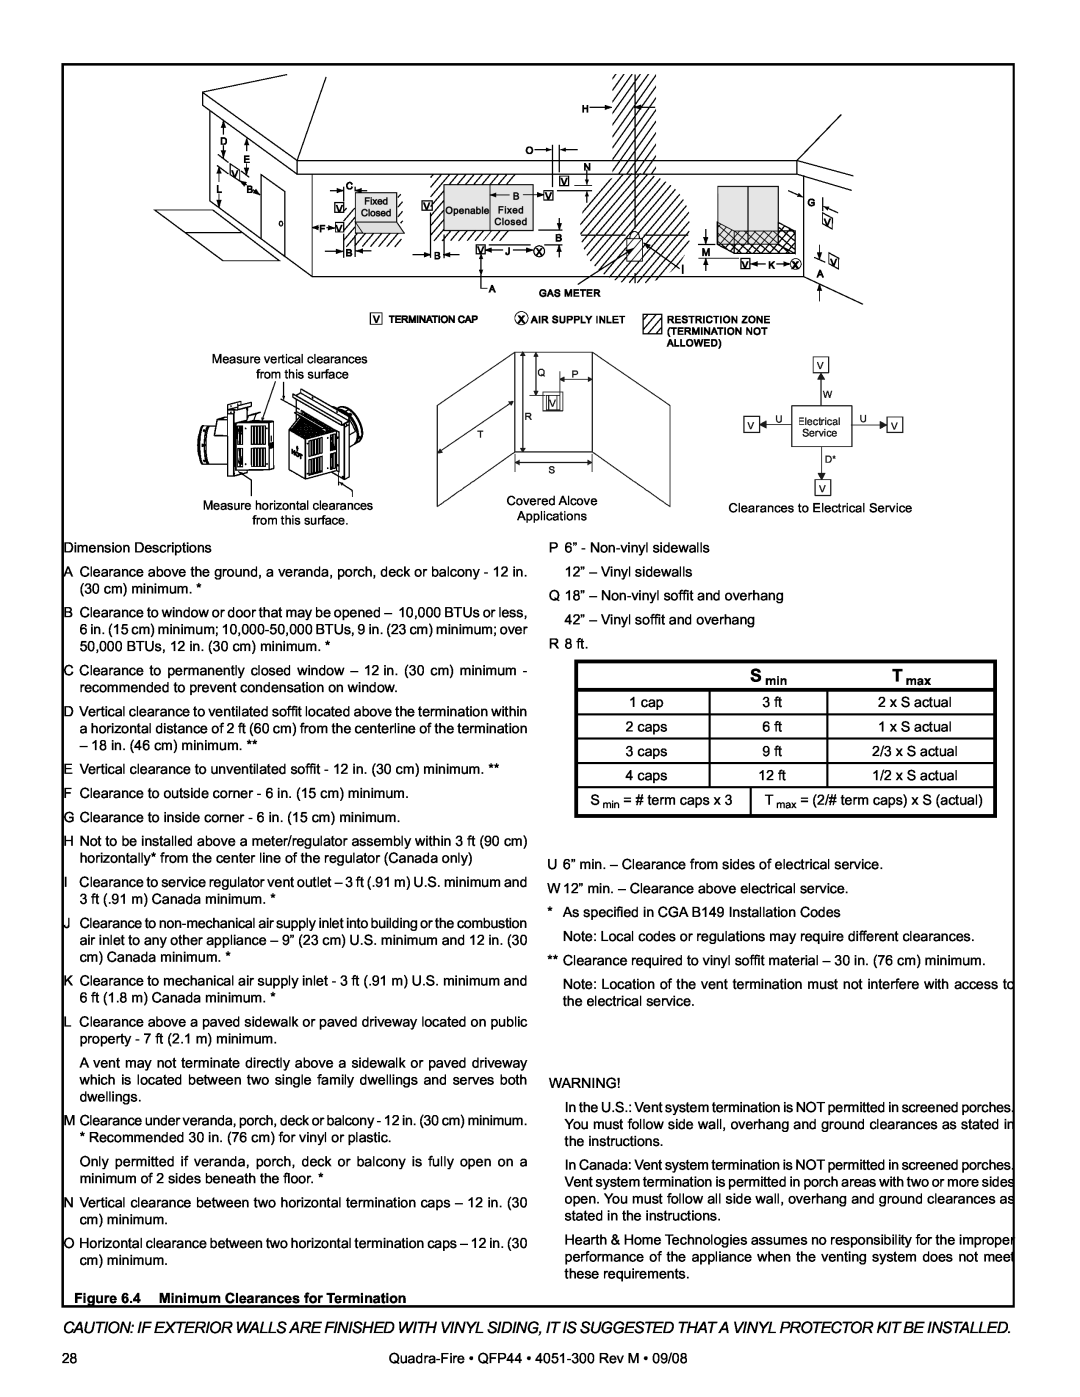 Quadra-Fire QFP44 owner manual 4 Minimum Clearances for Termination 